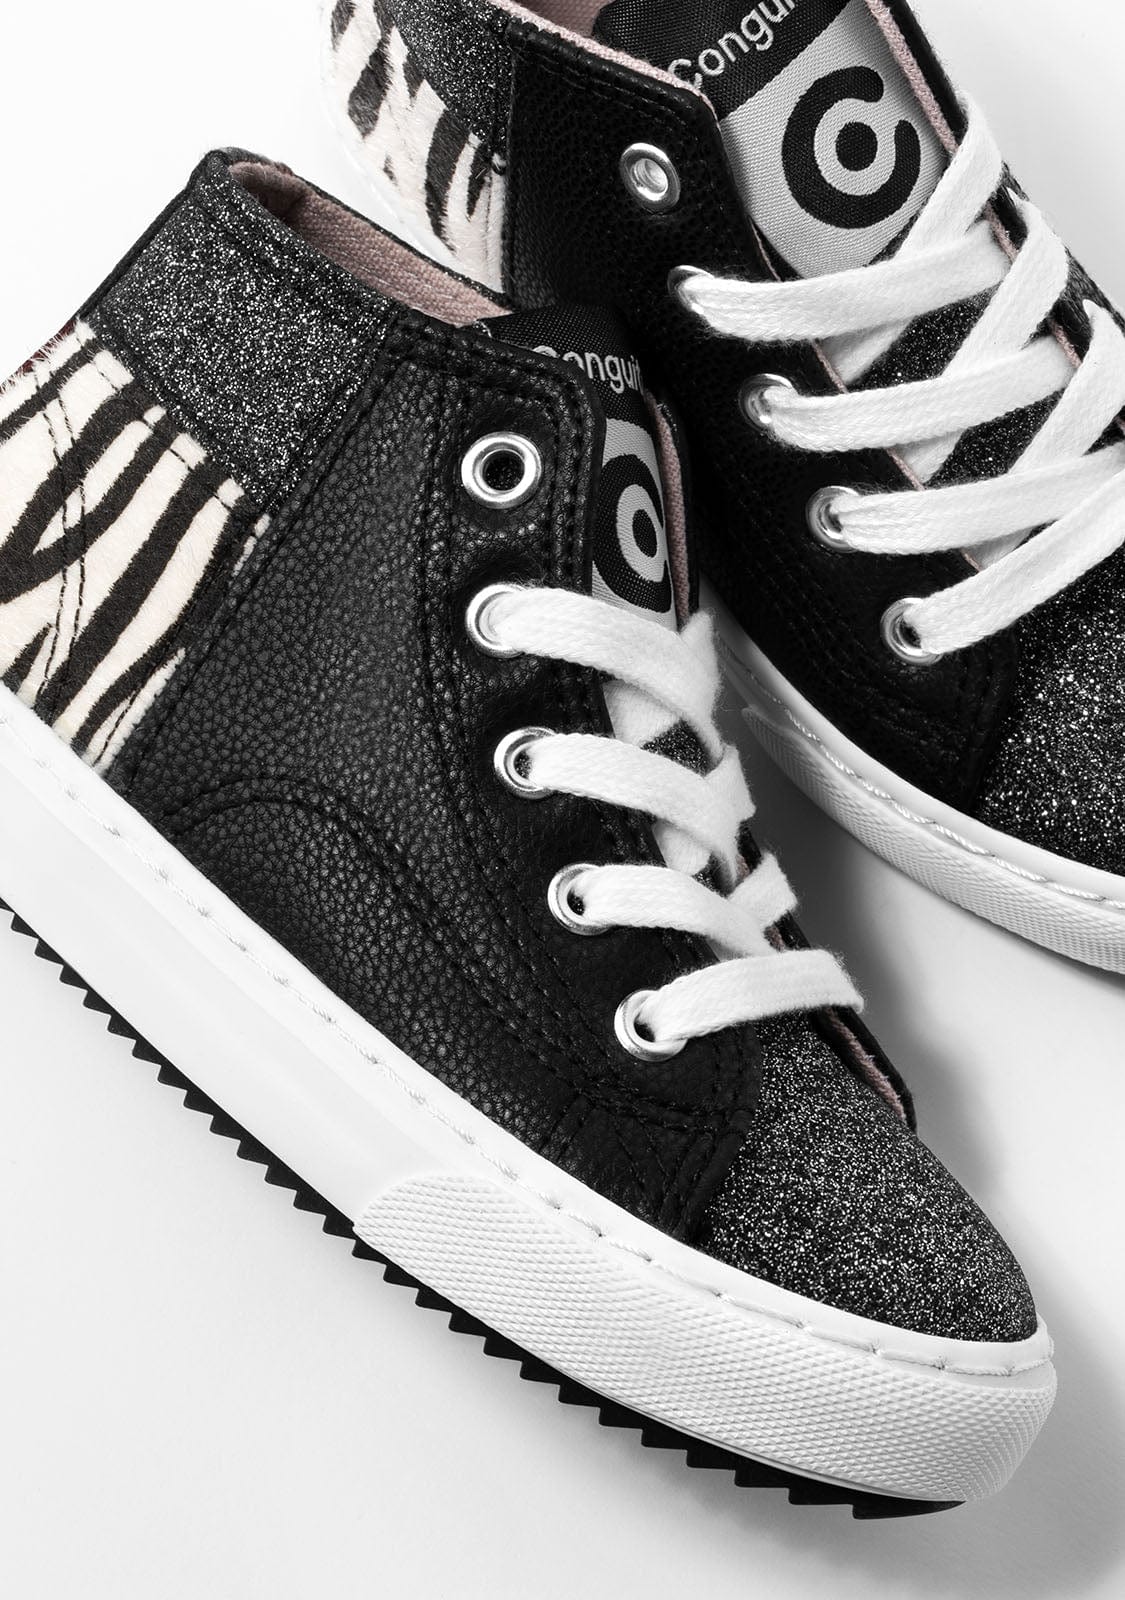 CONGUITOS Shoes Girl´s Black Zebra Hi-Top Sneakers